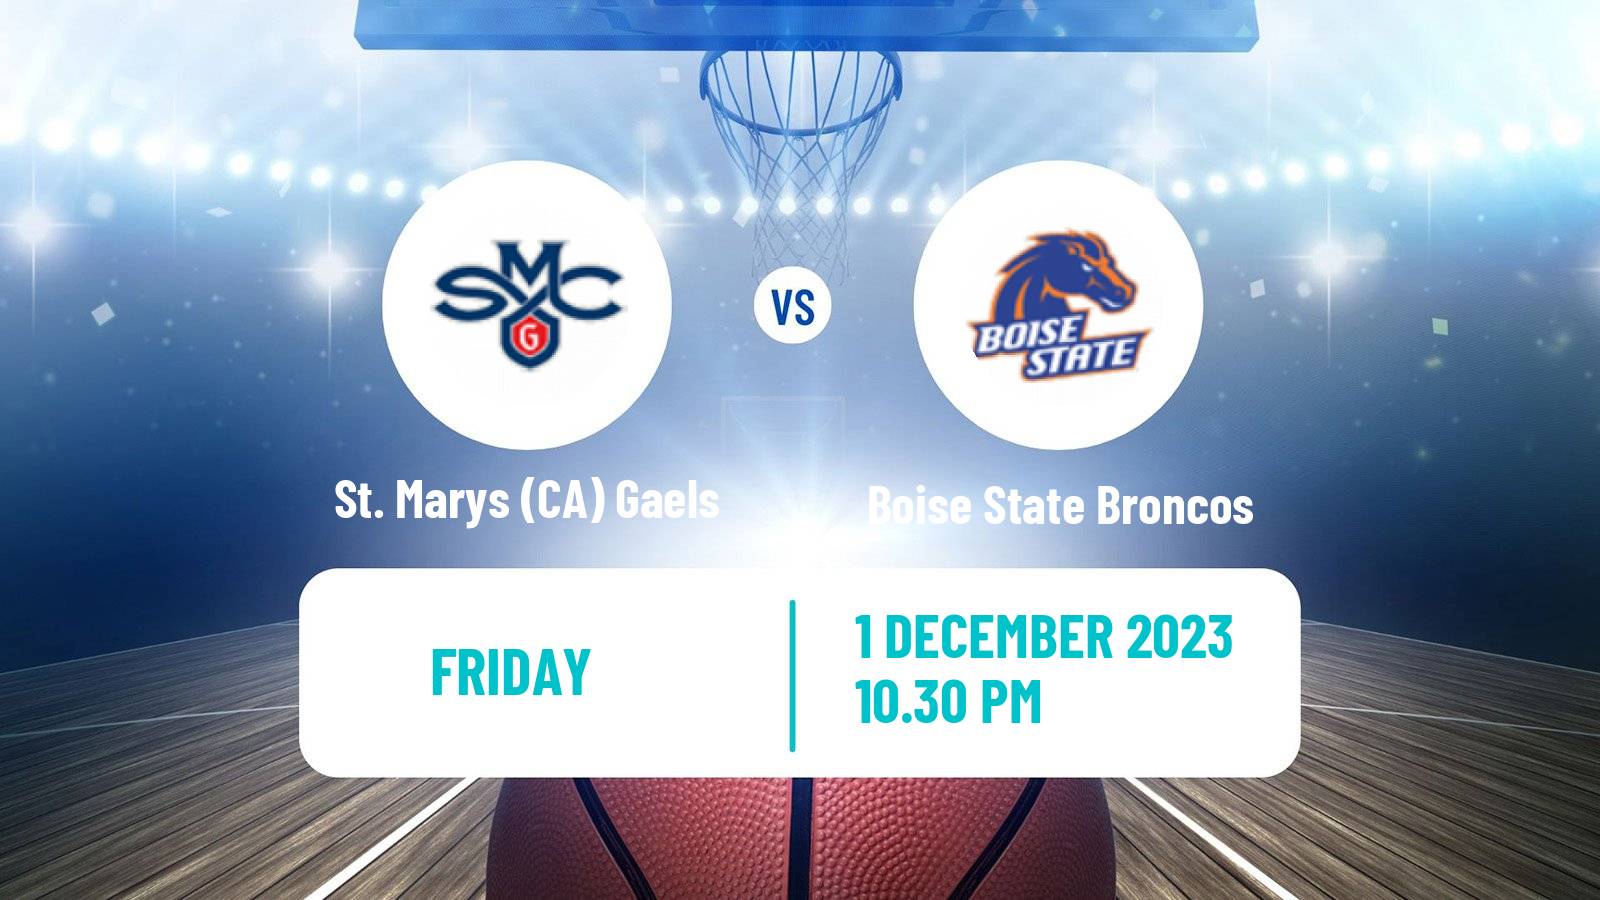 Basketball NCAA College Basketball St. Marys (CA) Gaels - Boise State Broncos